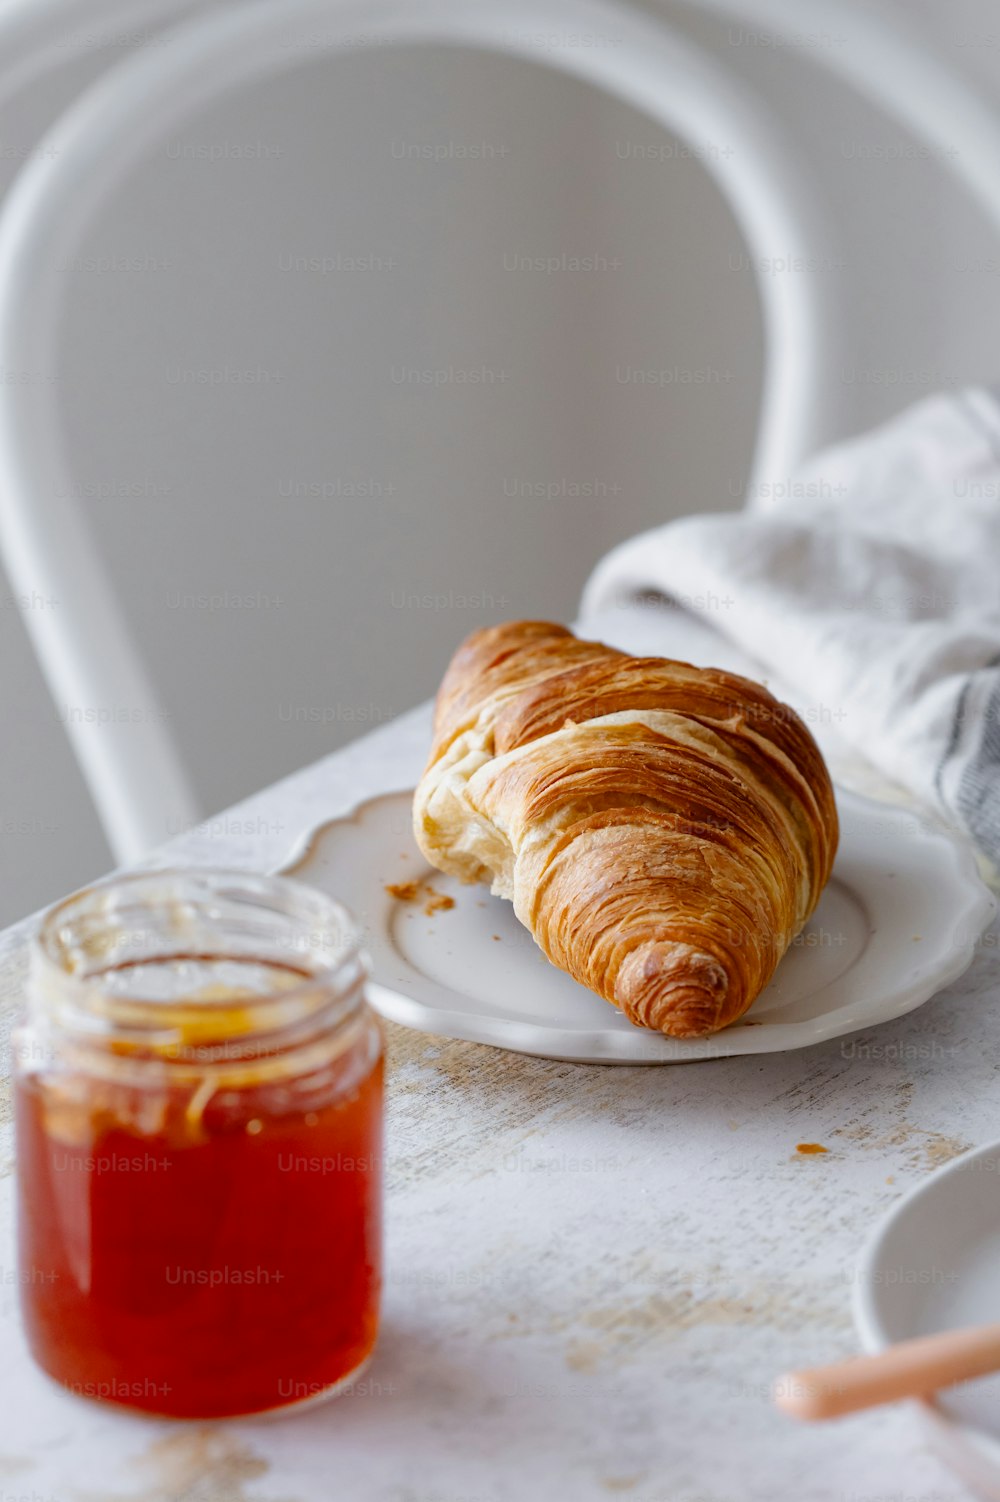 un croissant sentado en un plato junto a un frasco de miel